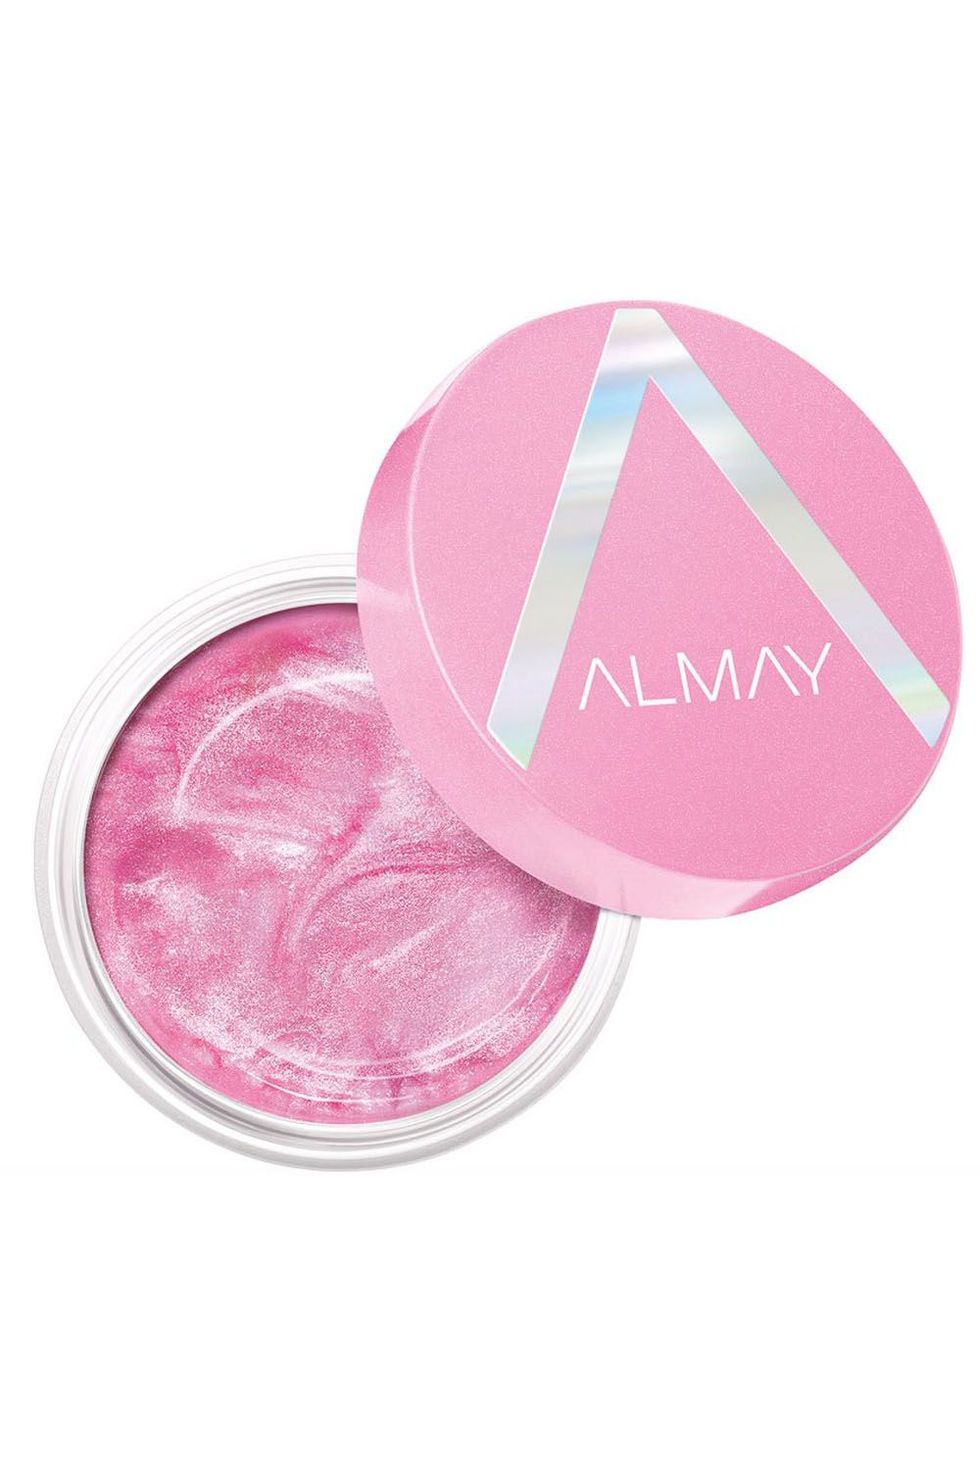 Almay Make Them Jelly Hi-Lite Blush Highlighter